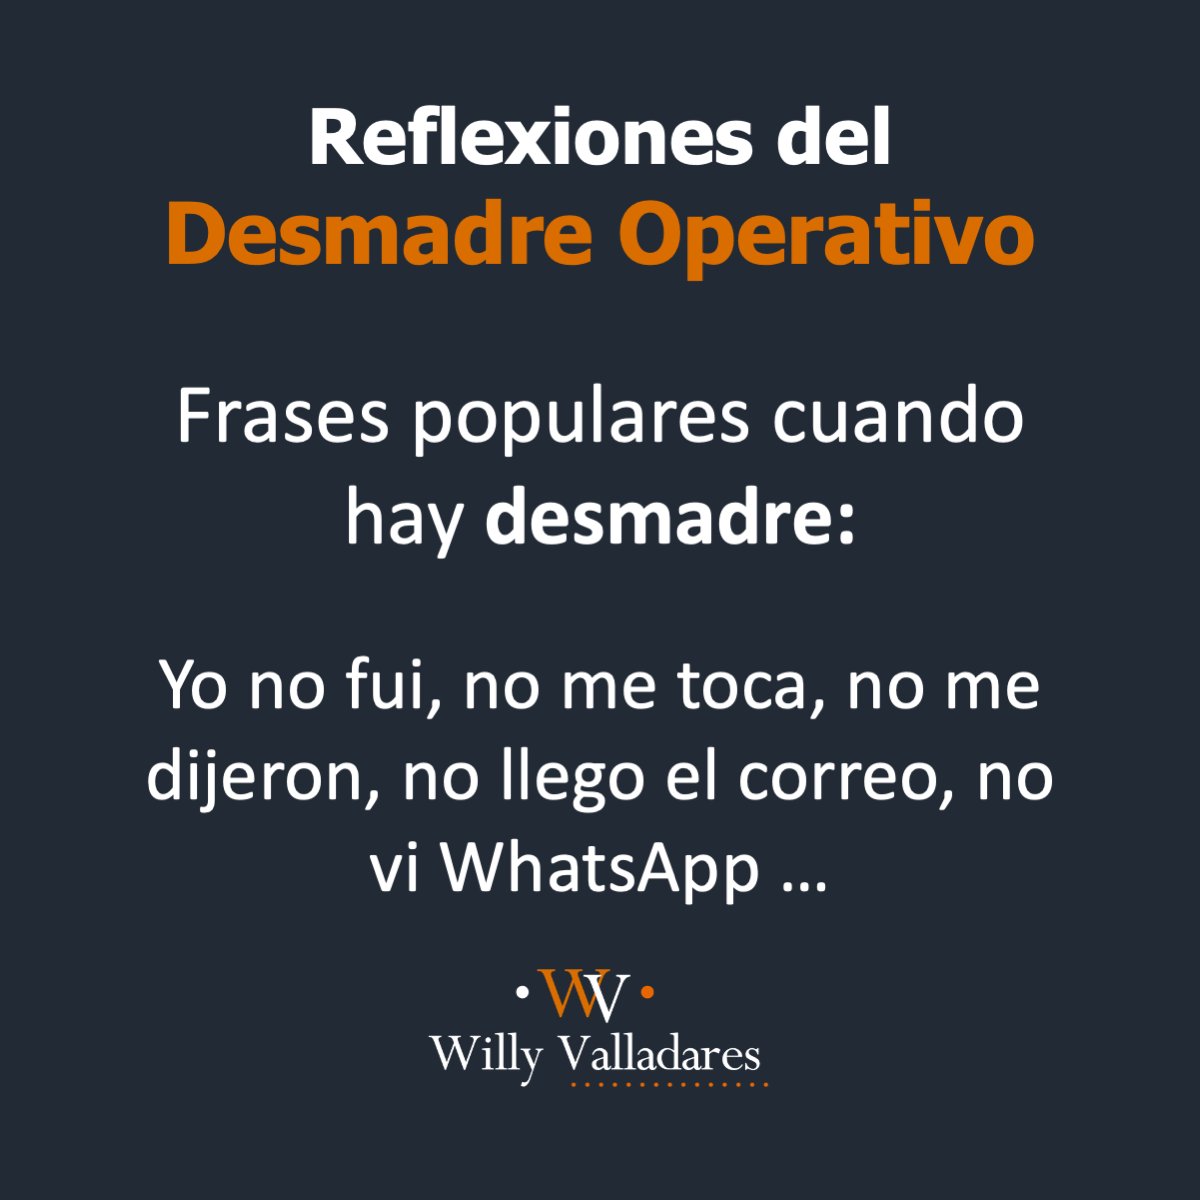 Willy Valladares on Twitter: 